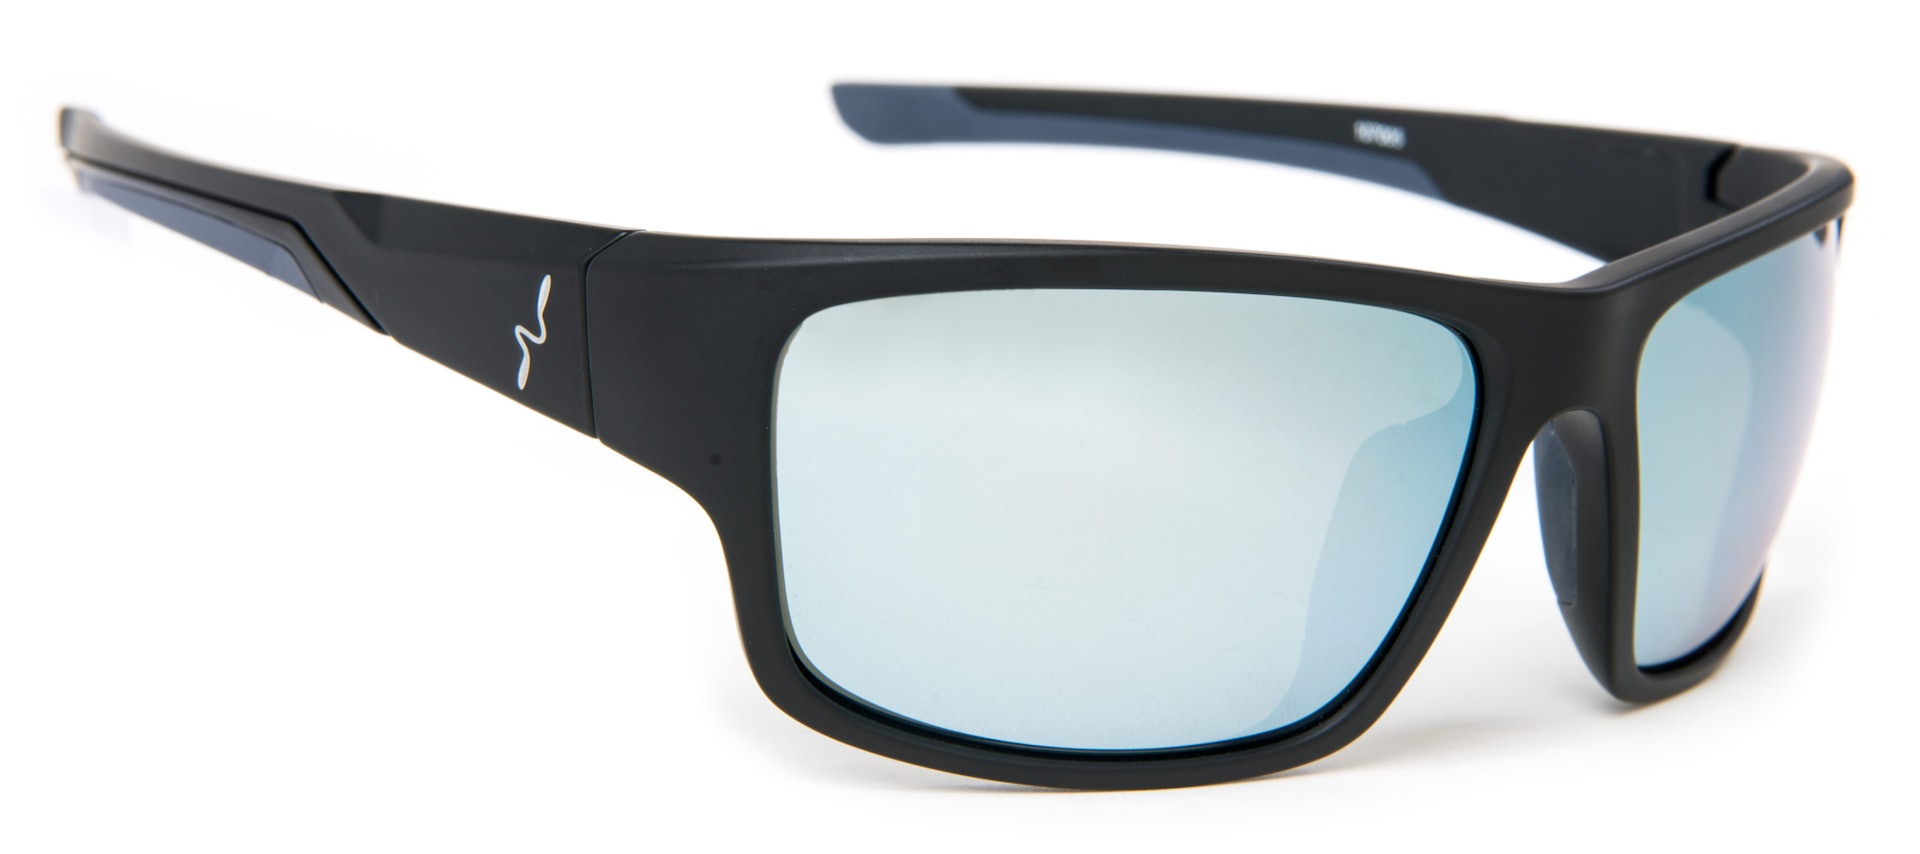 Experience Sunglasses - Grey-Green Lens (bild 1 av 1)